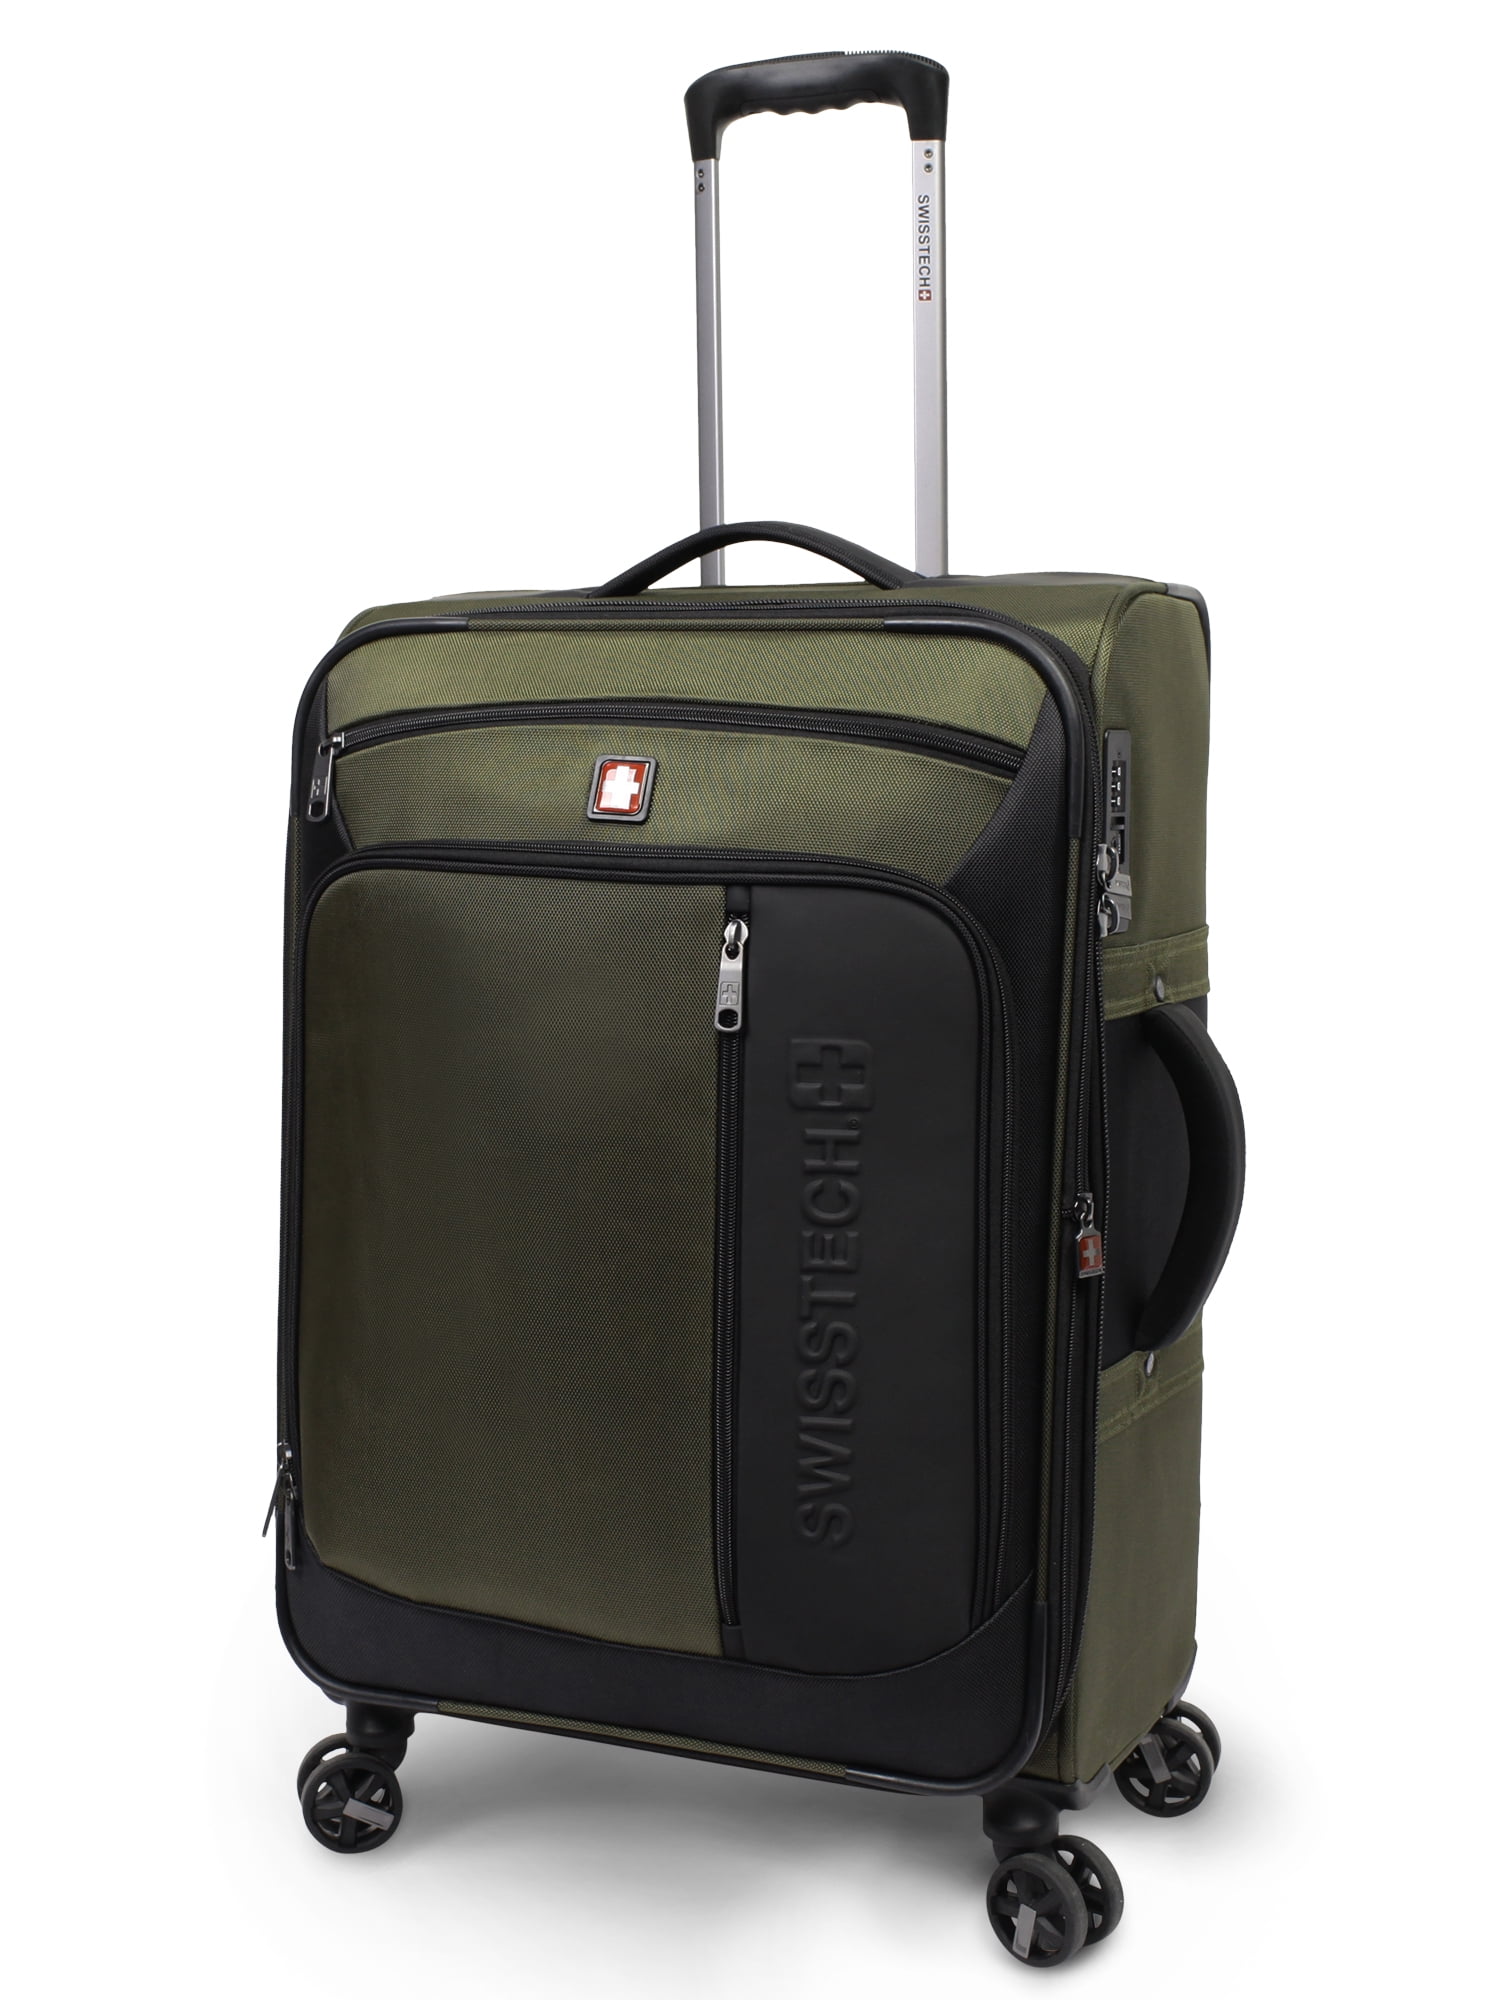 SwissTech Urban Trek 28" Check Soft Side Luggage, Olive (Walmart Exclusive)